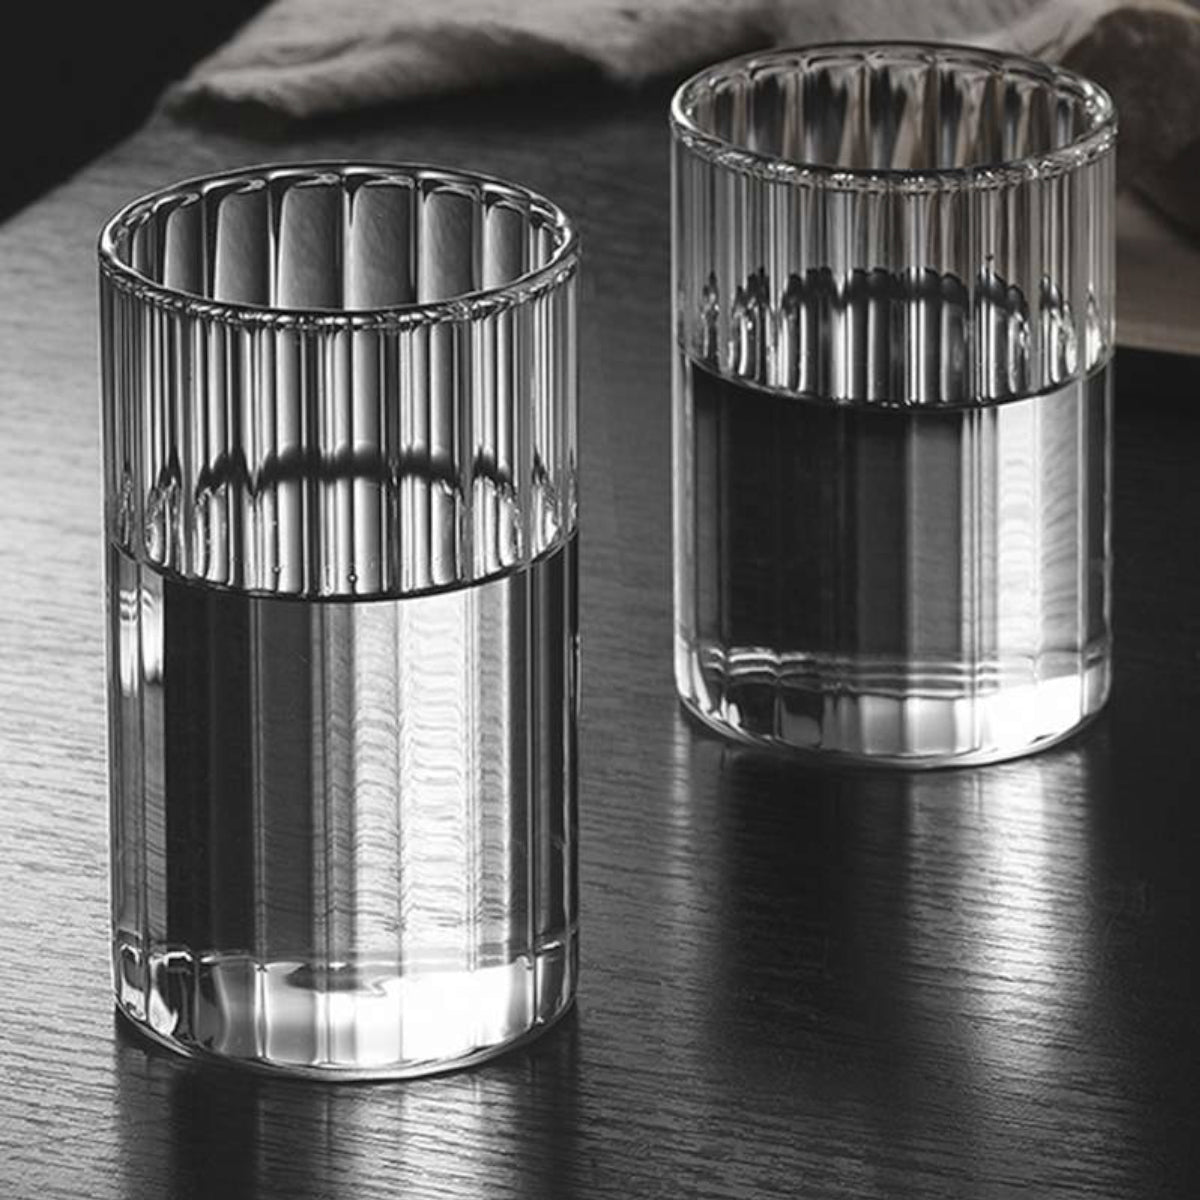 Handmade Striped Design Drinking Glass